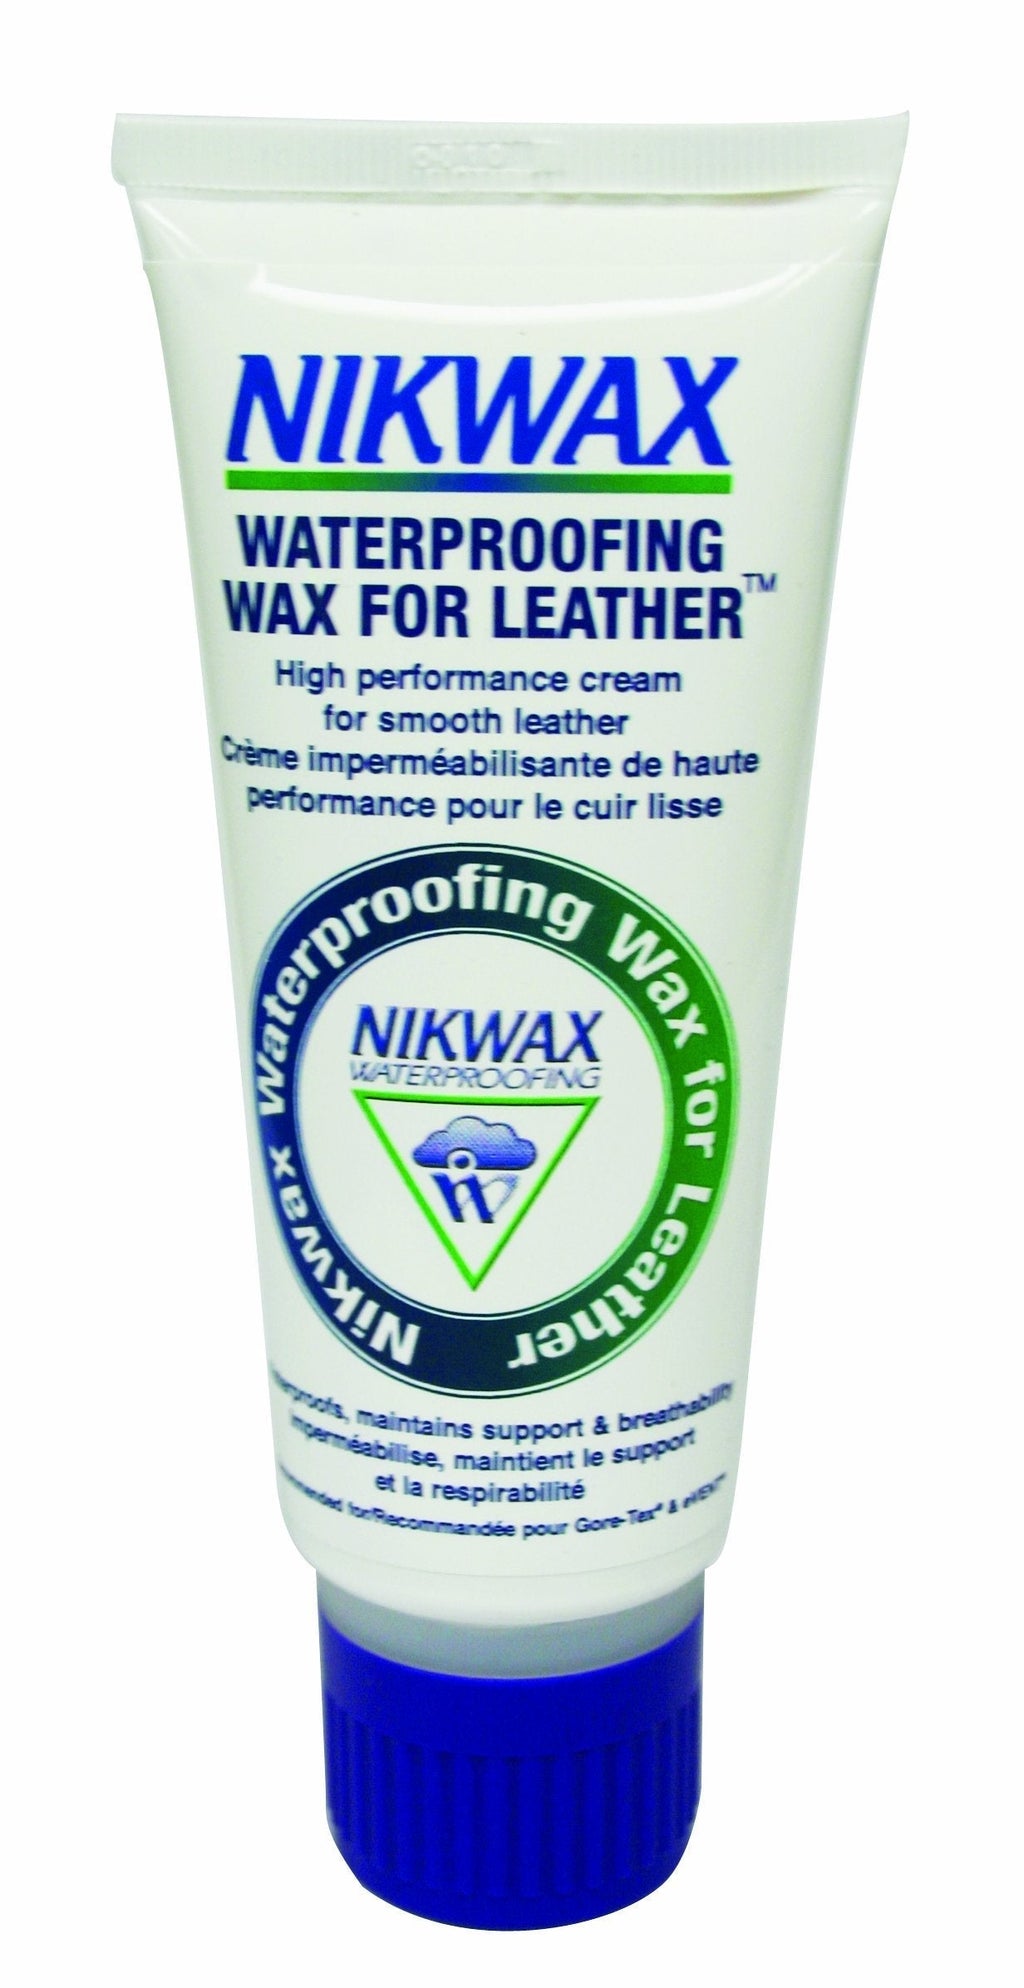 [AUSTRALIA] - Nikwax Waterproofing Wax for Leather 